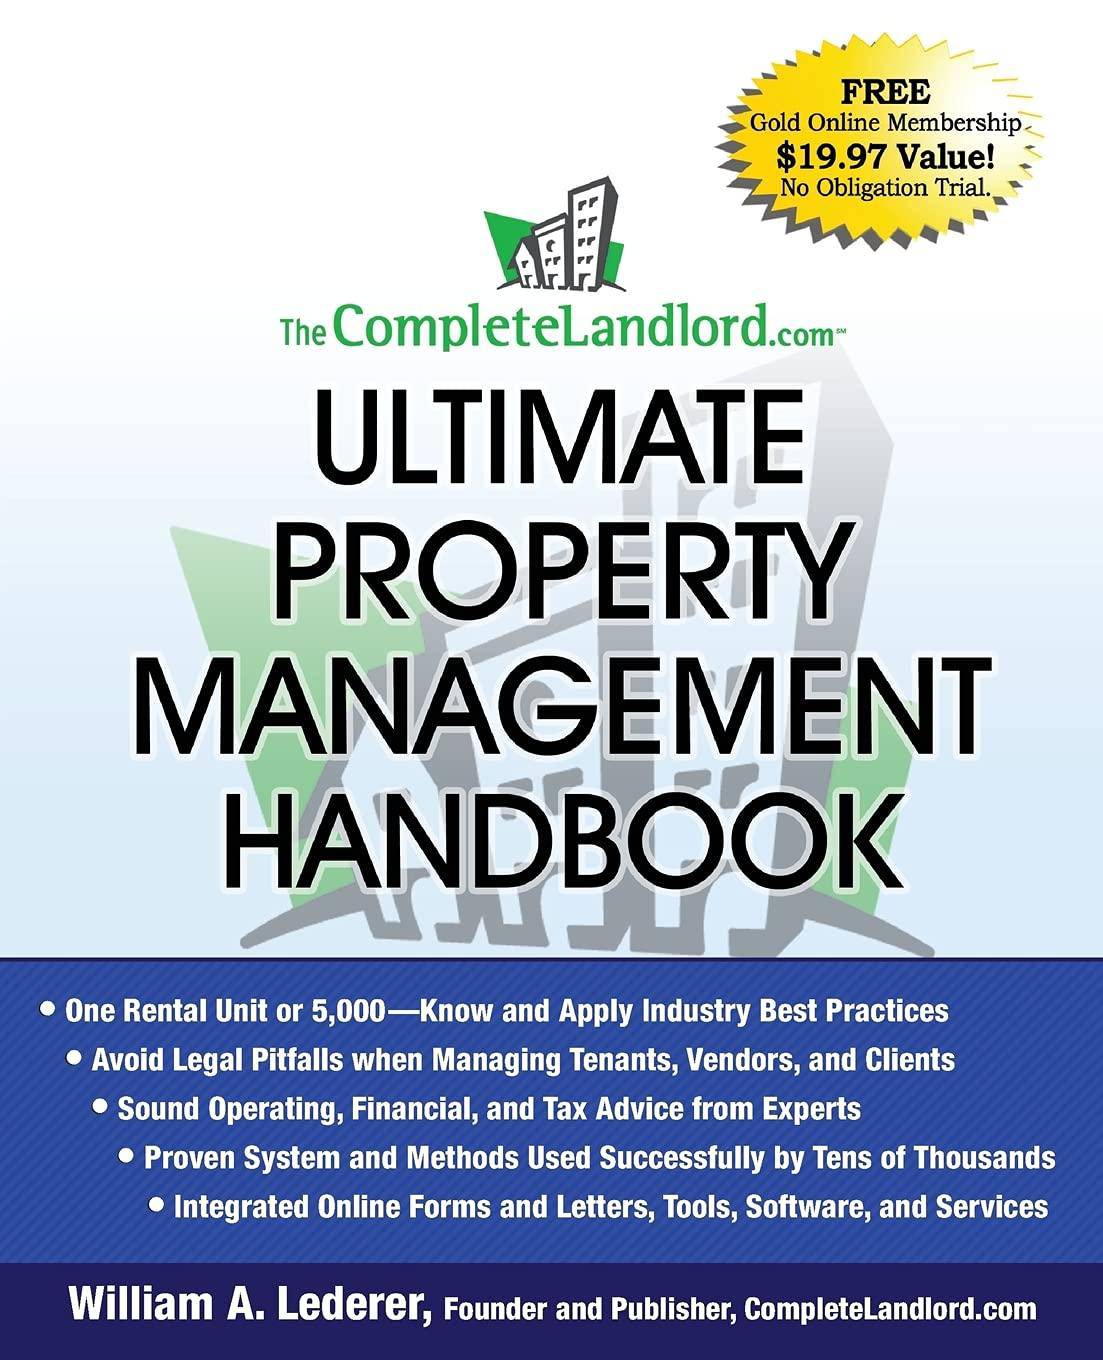 The CompleteLandlord.com Ultimate Property Management Handbook - SureShot Books Publishing LLC